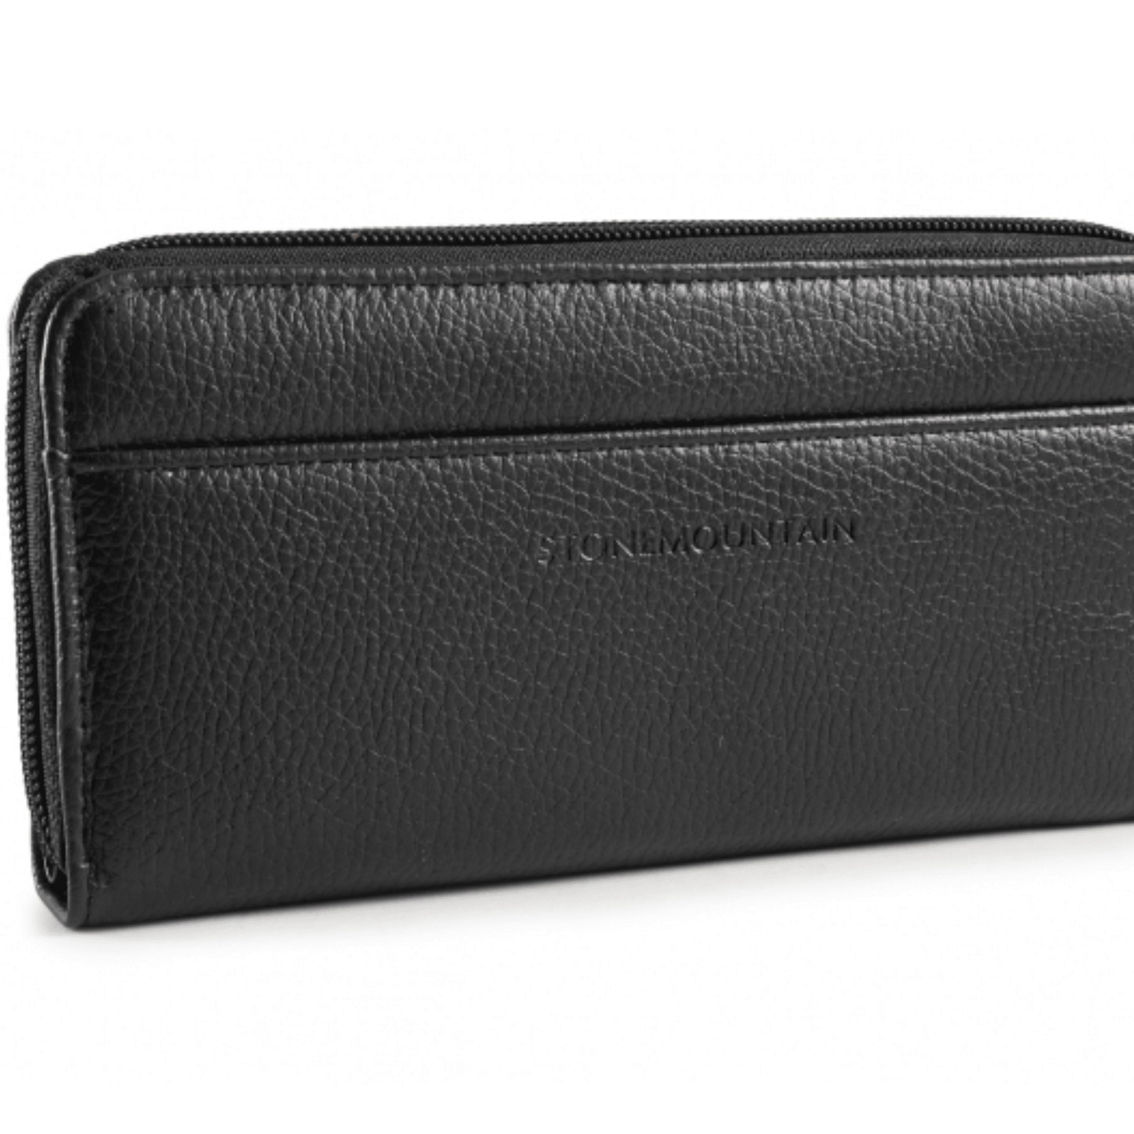 Stone Mountain Ludlow Leather Tab Zip Around Wallet Clutch GiftBox - Image 4 of 5